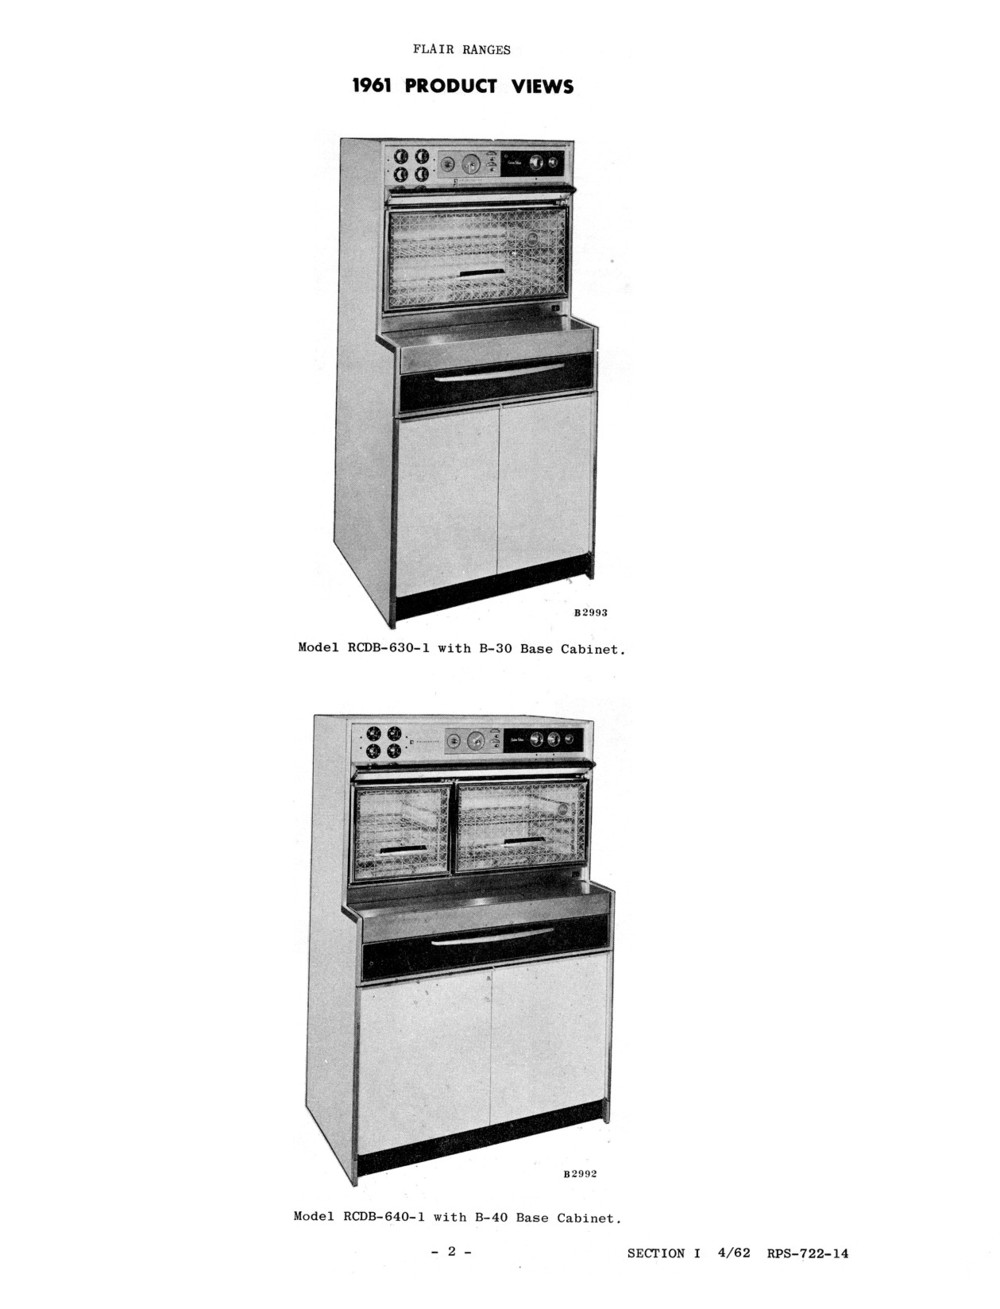 1964 Frigidaire Electric Ranges Ad - RCIH-645, RCIH-639 and RCI-G75-64